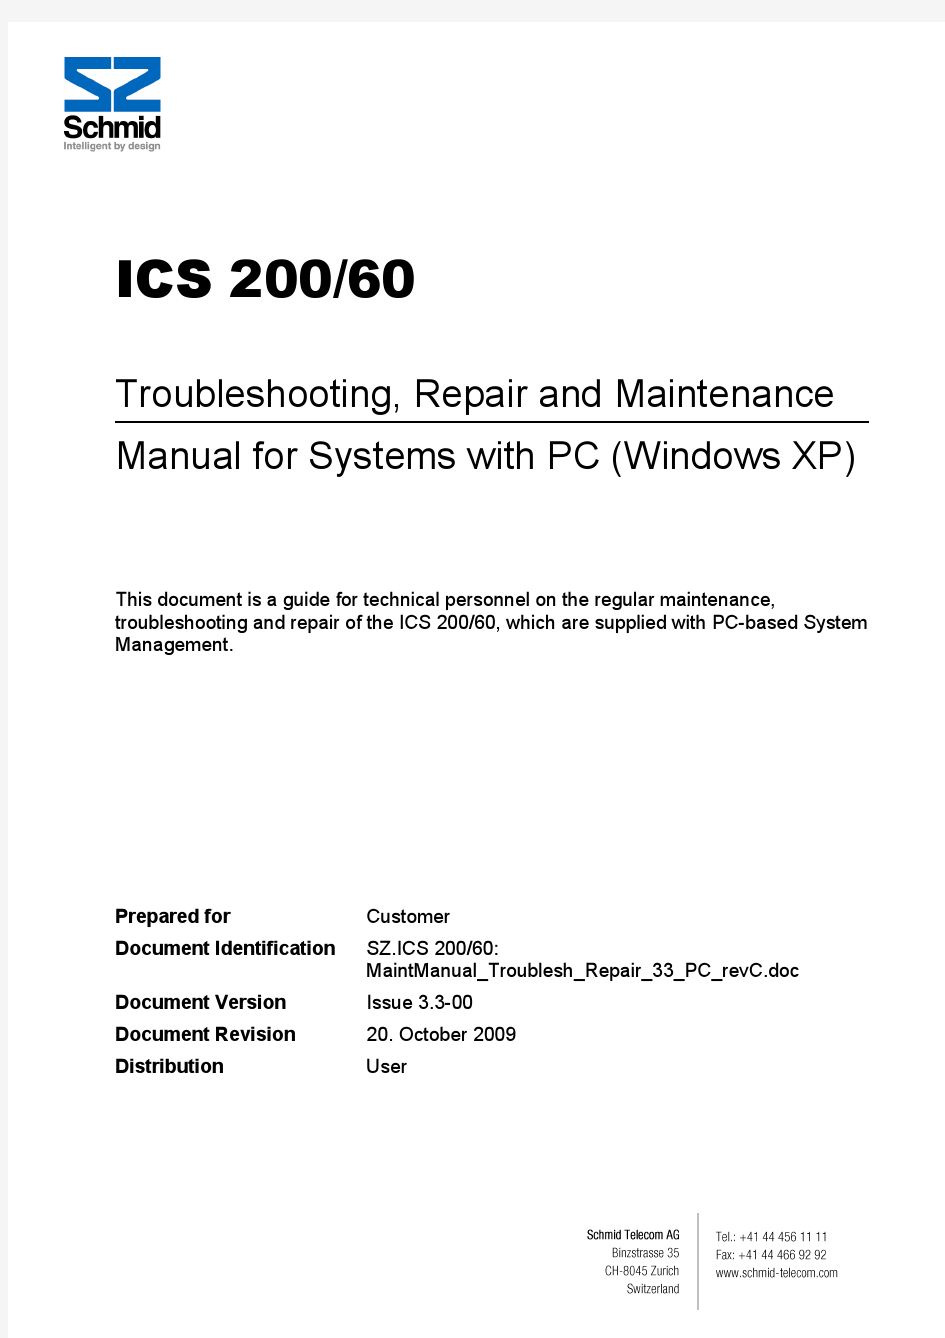 MaintManual Troublesh Repair 33_PC_revC施密德内话故障检修手册